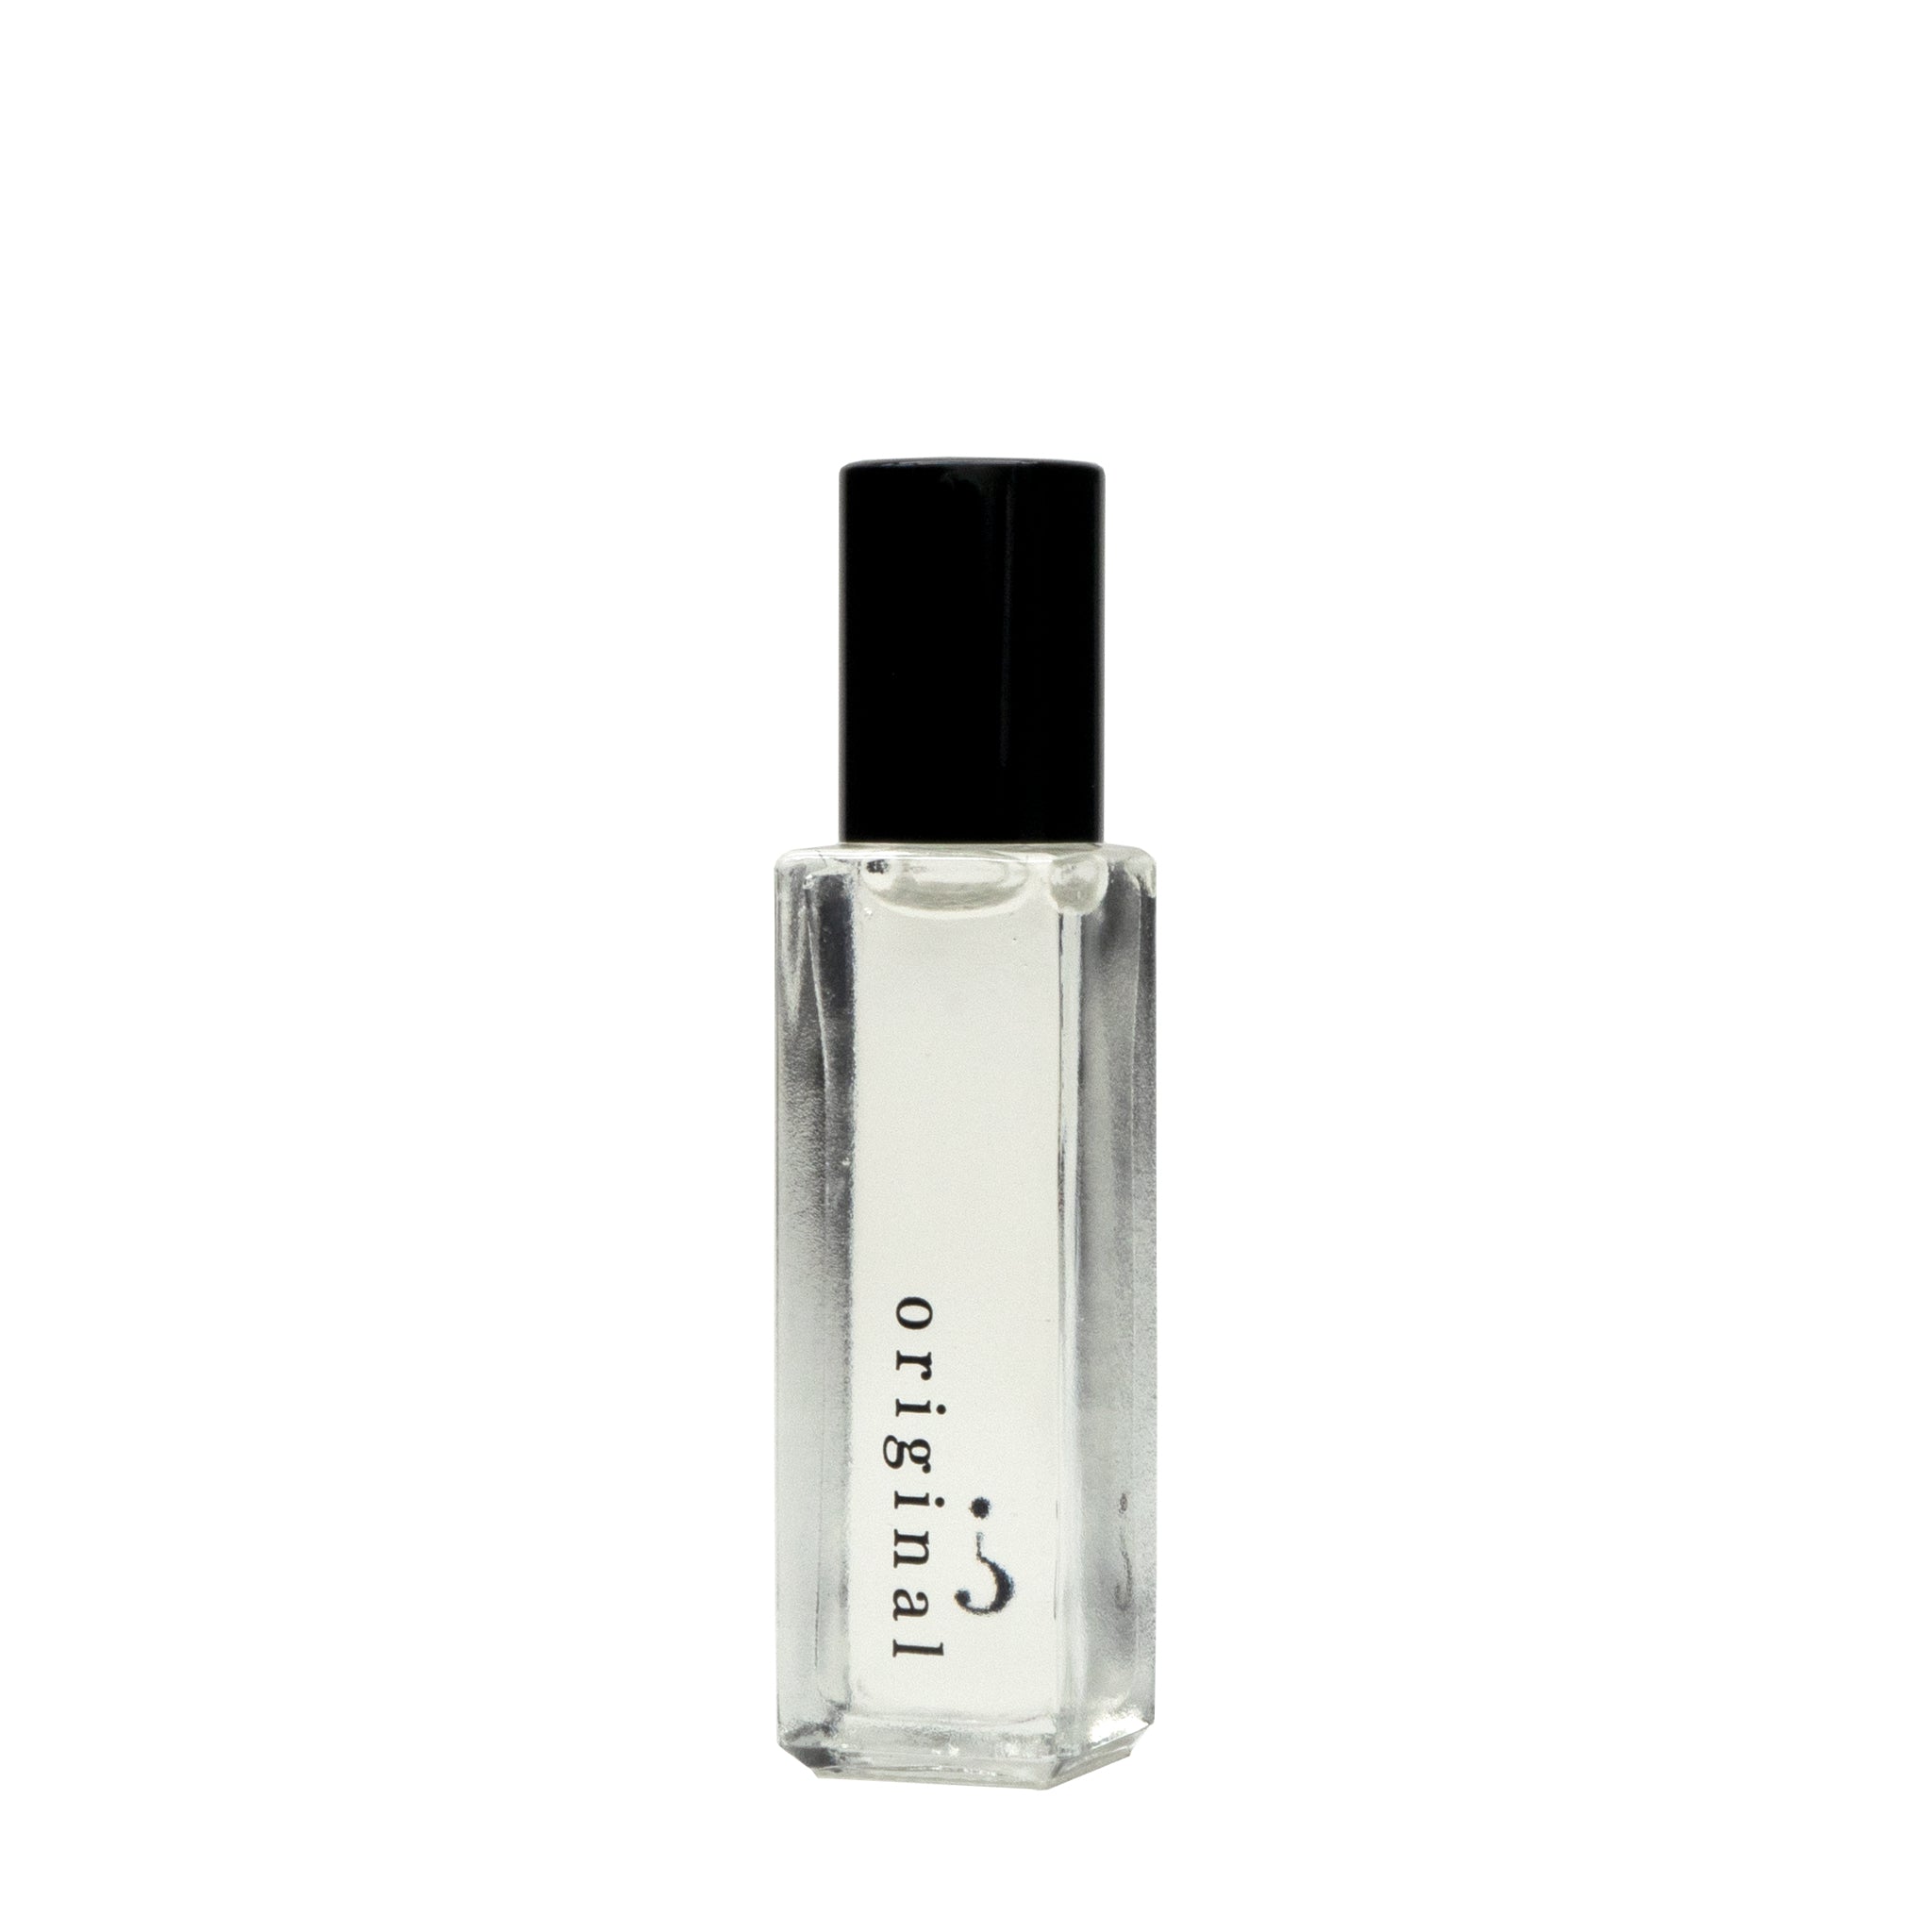 Gain Soap unisex perfume body oil 1/3 oz. roll on bottle (1